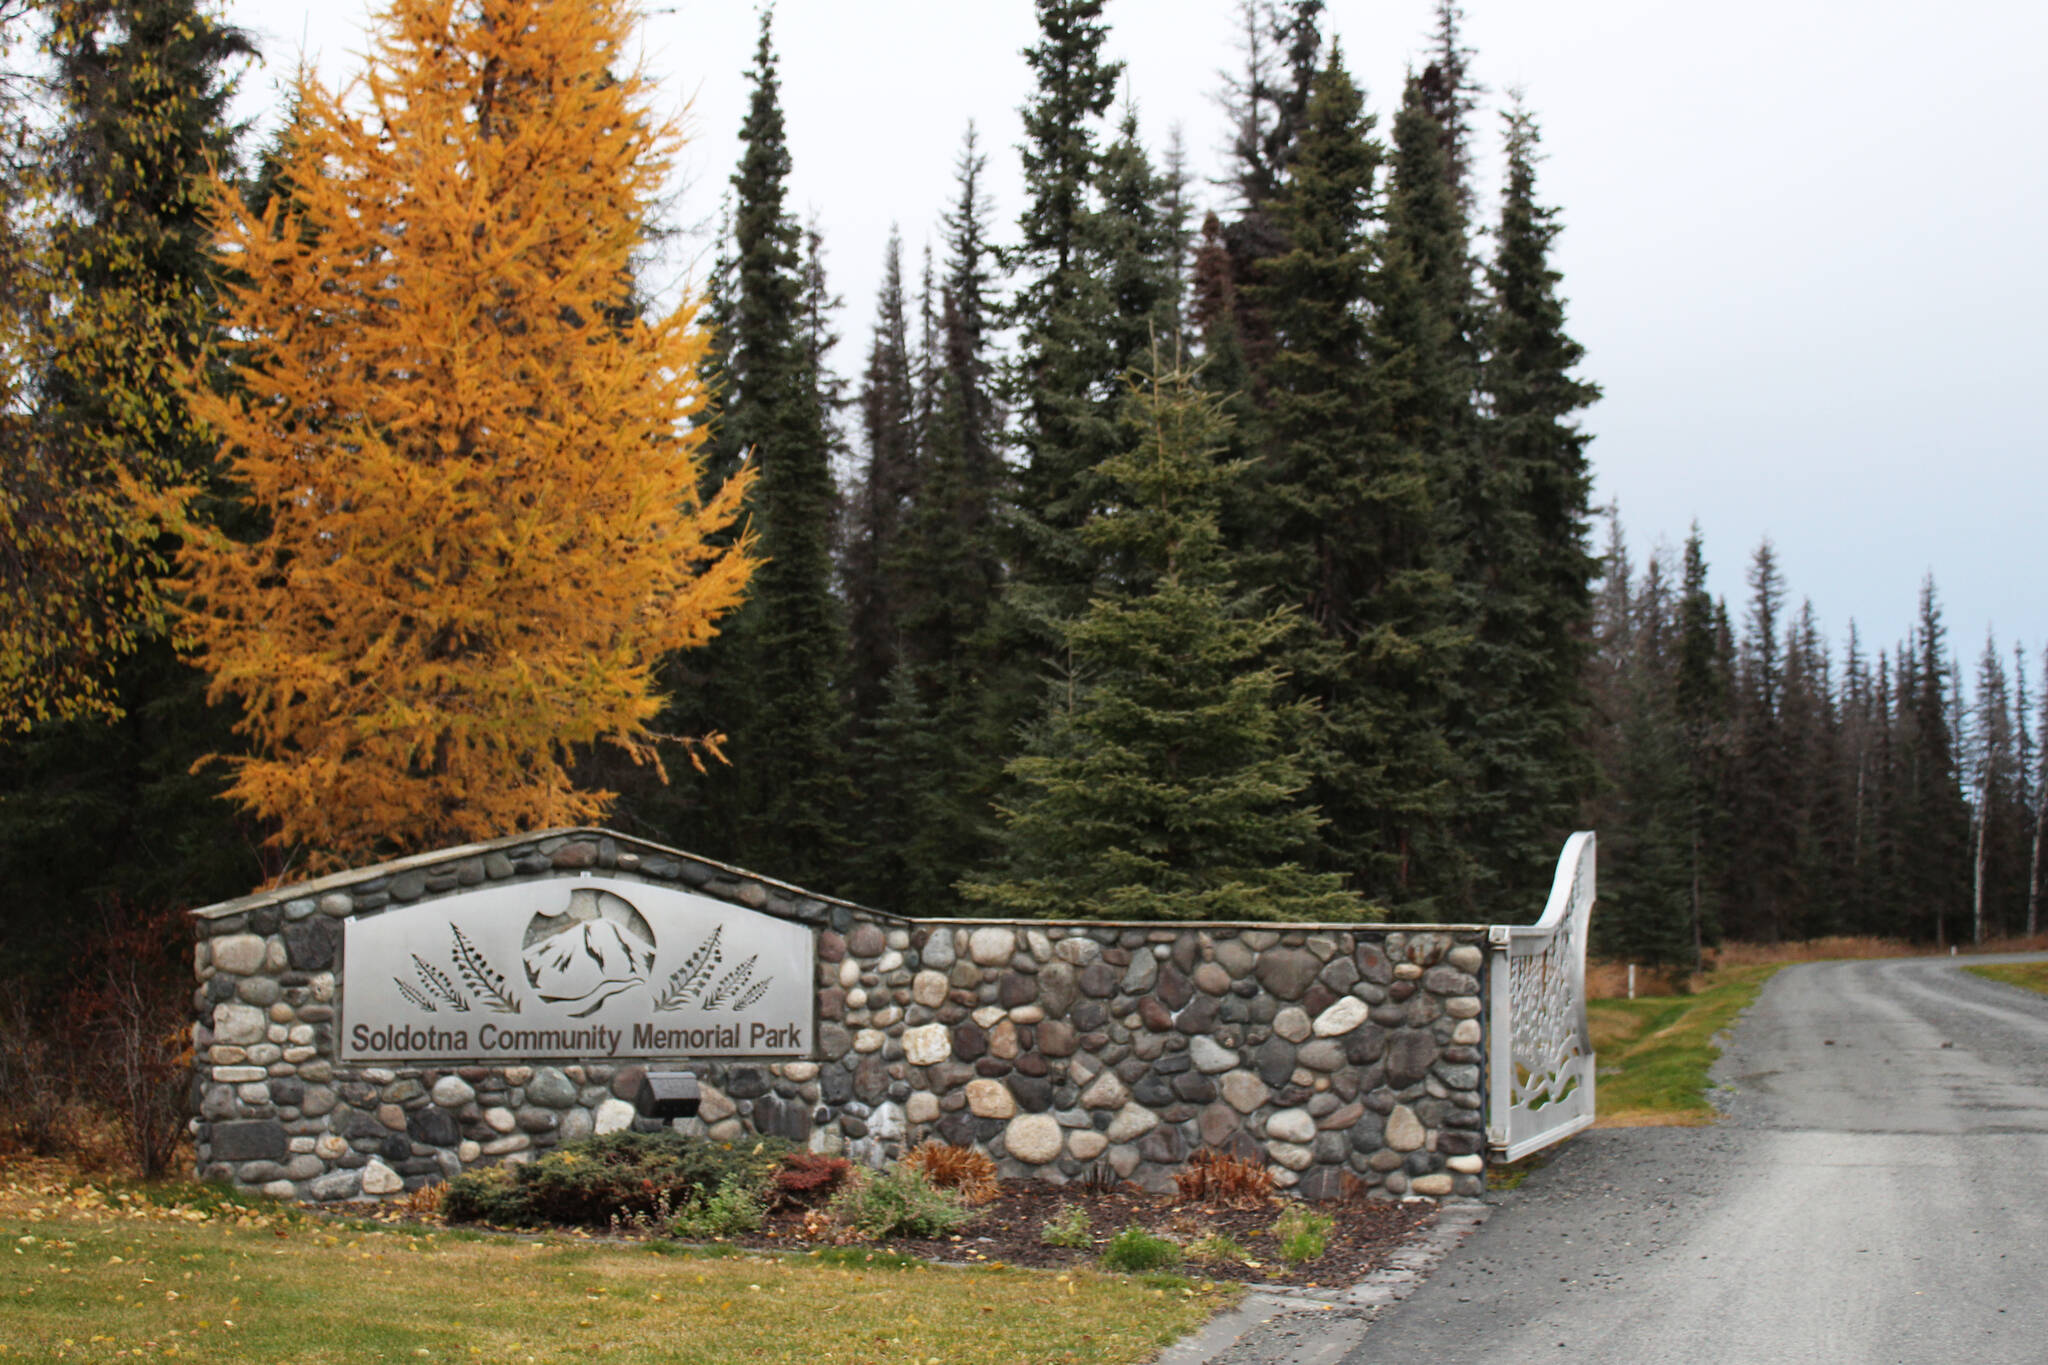 Gates indicate the entrance of Soldotna Community Memorial Park on Tuesday, Oct. 19, 2021 in Soldotna, Alaska. (Ashlyn O’Hara/Peninsula Clarion)